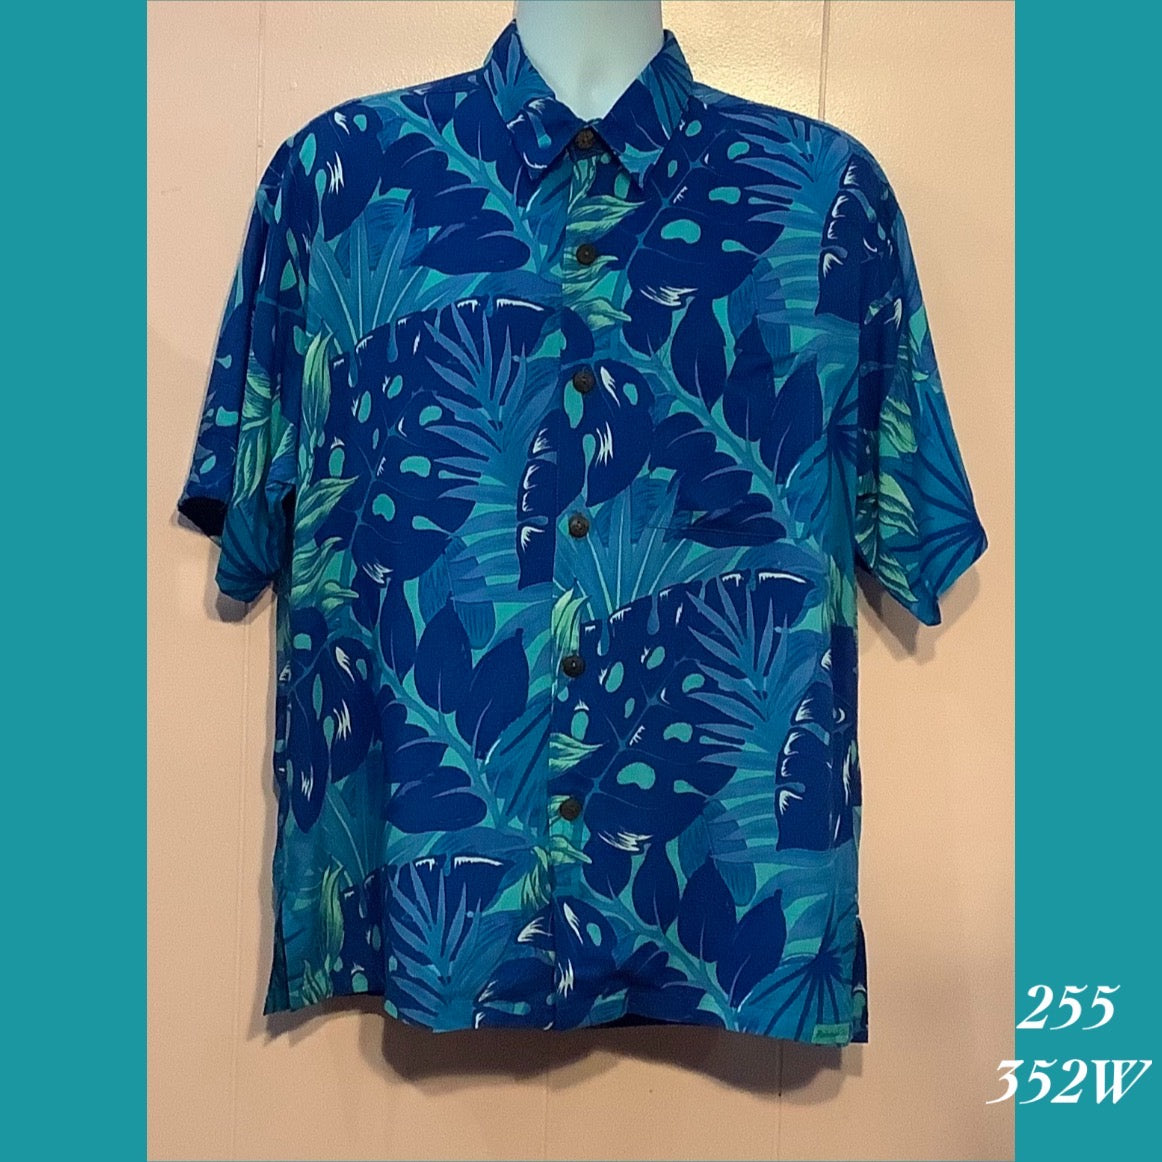 255 - 352W , Men's Aloha shirt